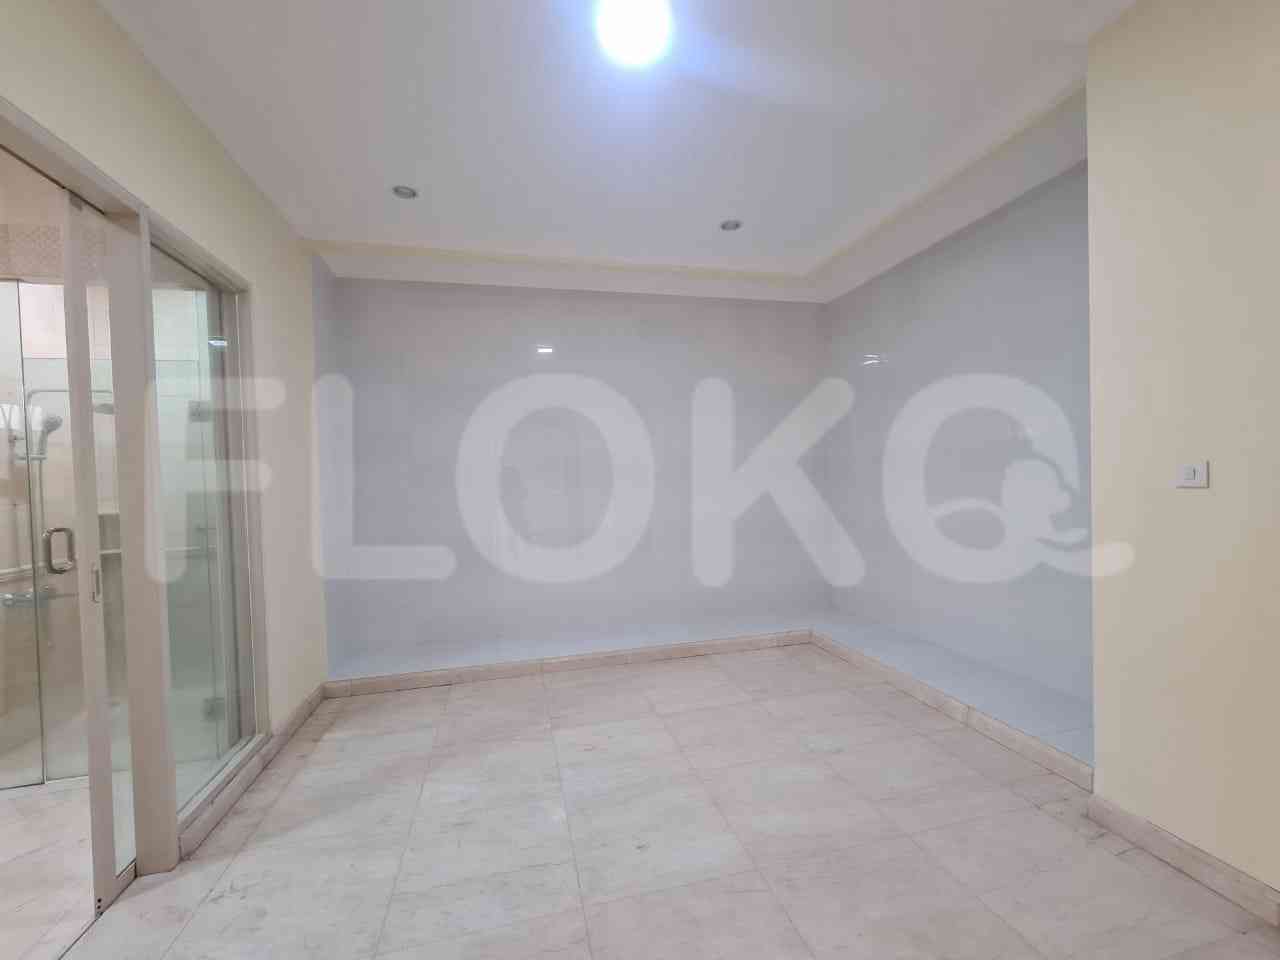 400 sqm, 4 BR house for rent in Pondok Indah 2